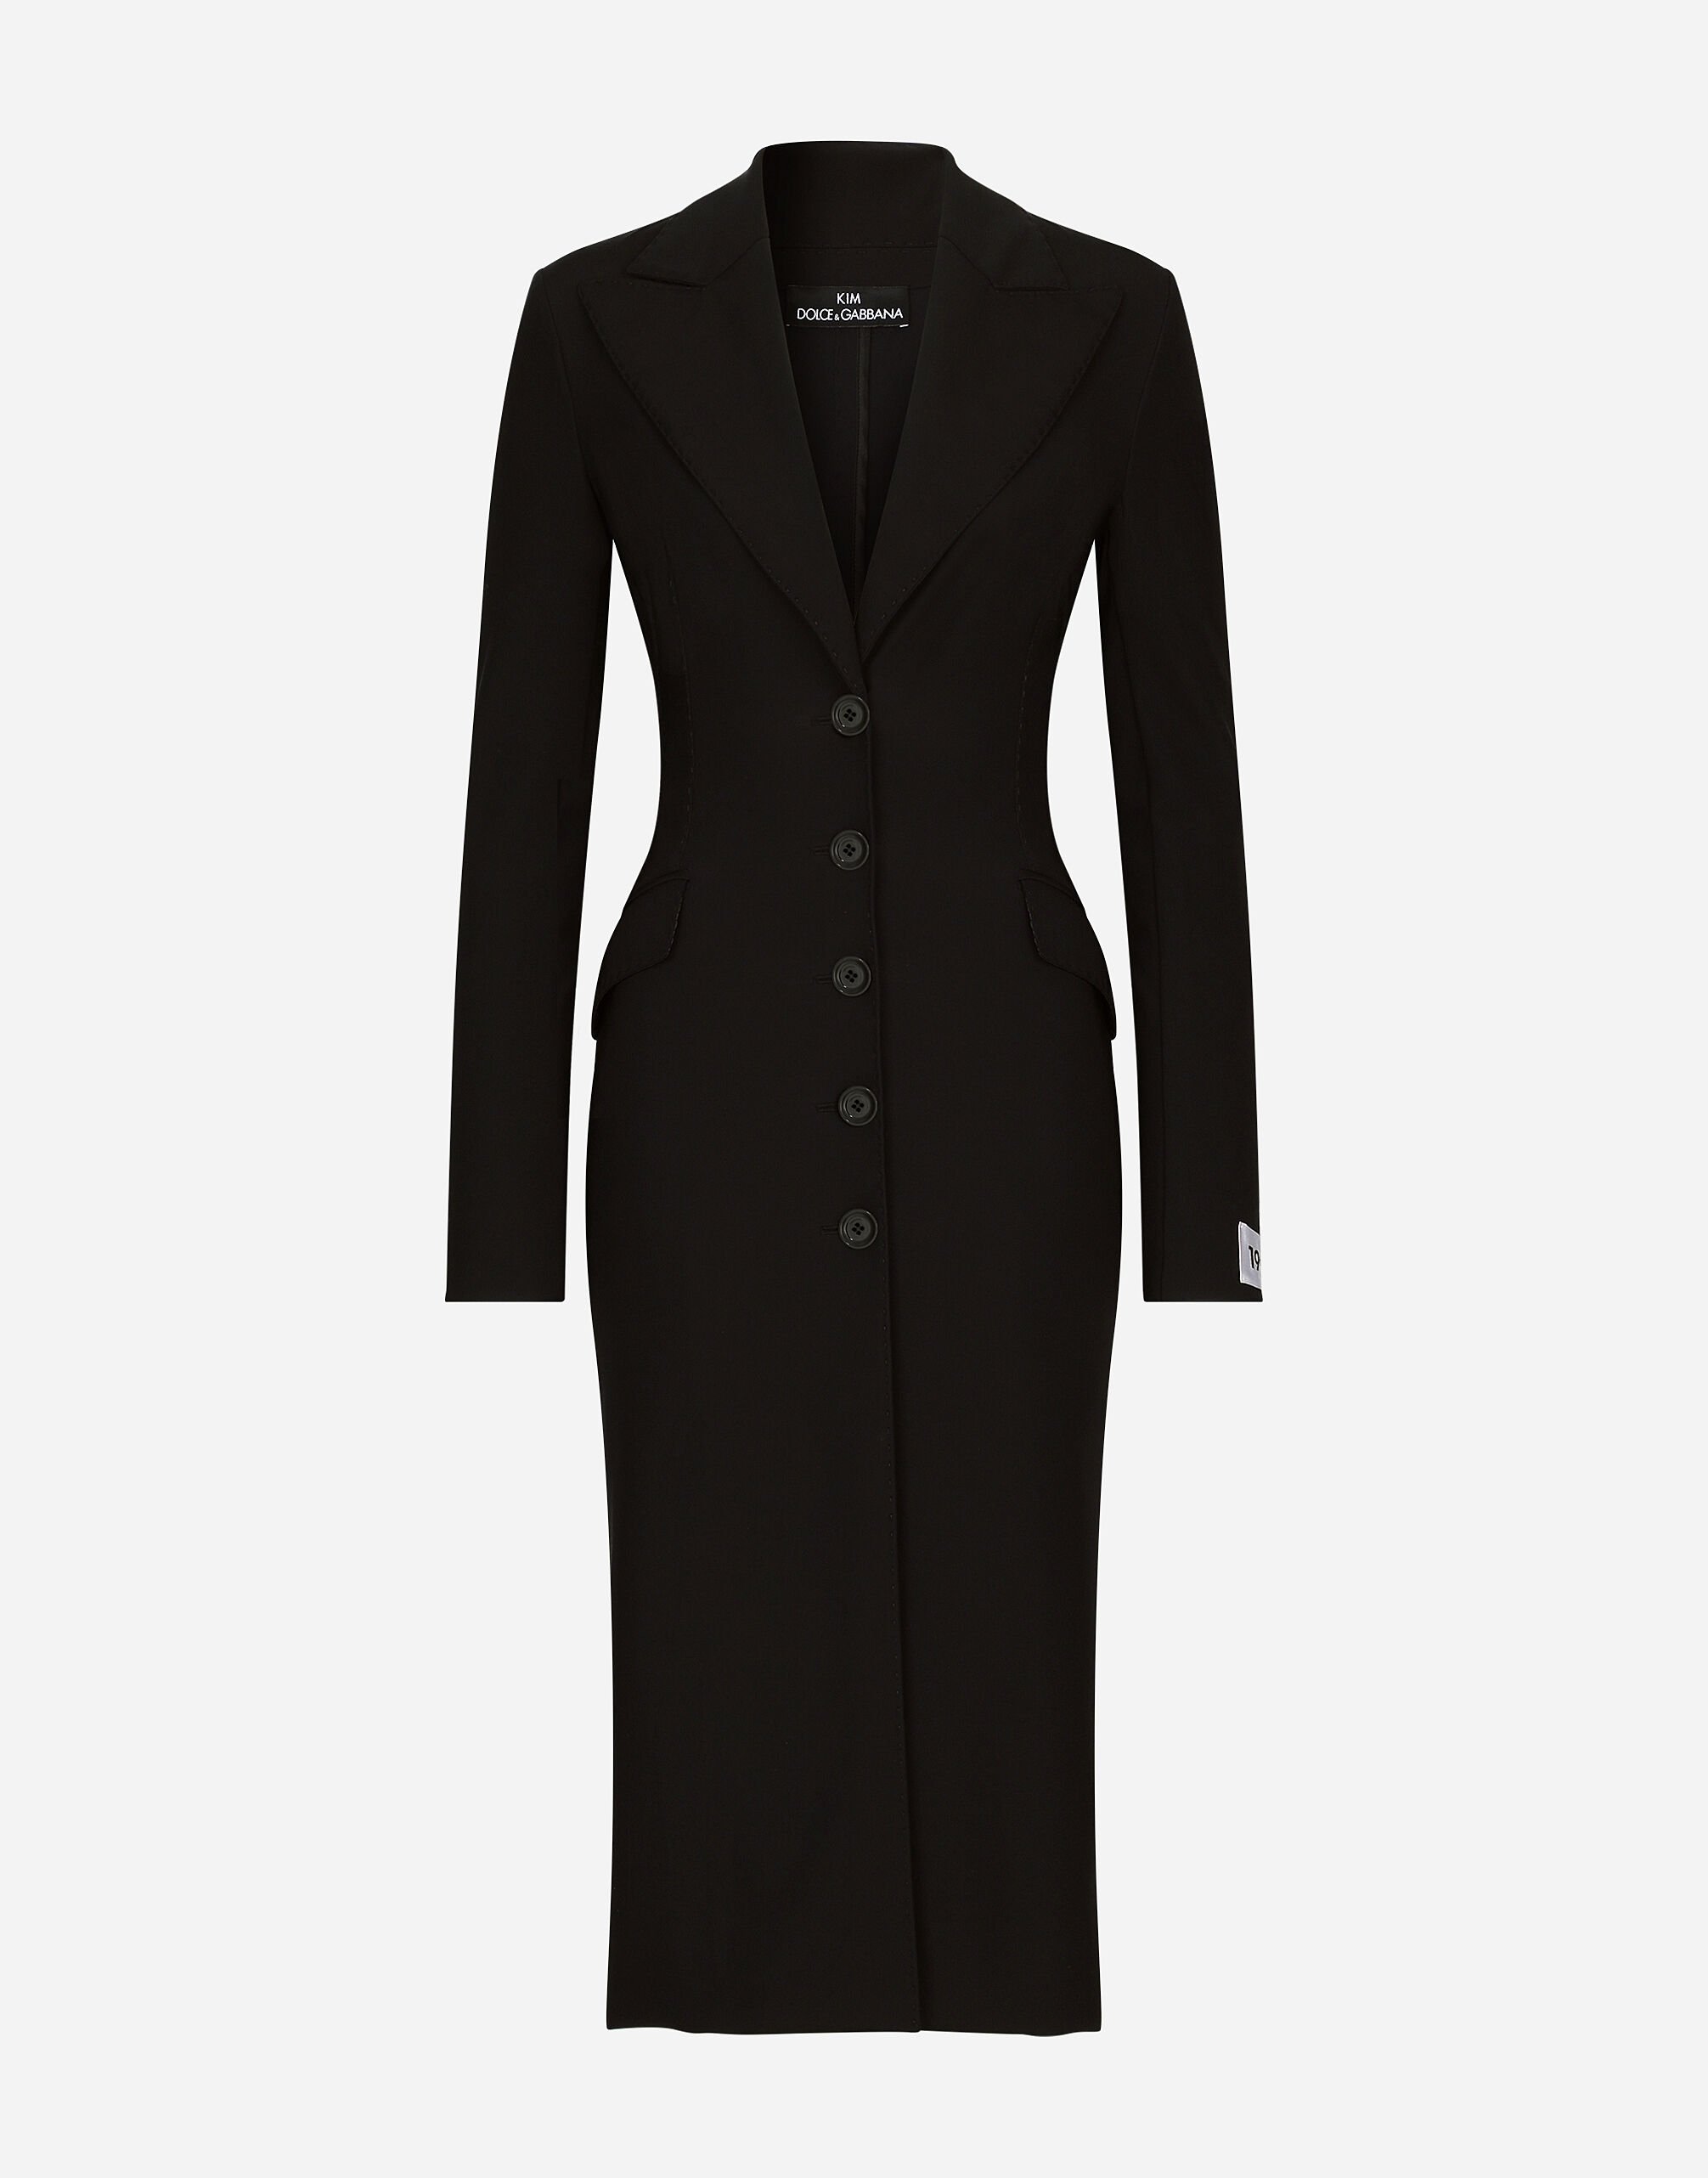 Dolce & Gabbana KIM DOLCE&GABBANA Jersey coat dress with the Re-Edition label Black VG6187VN187